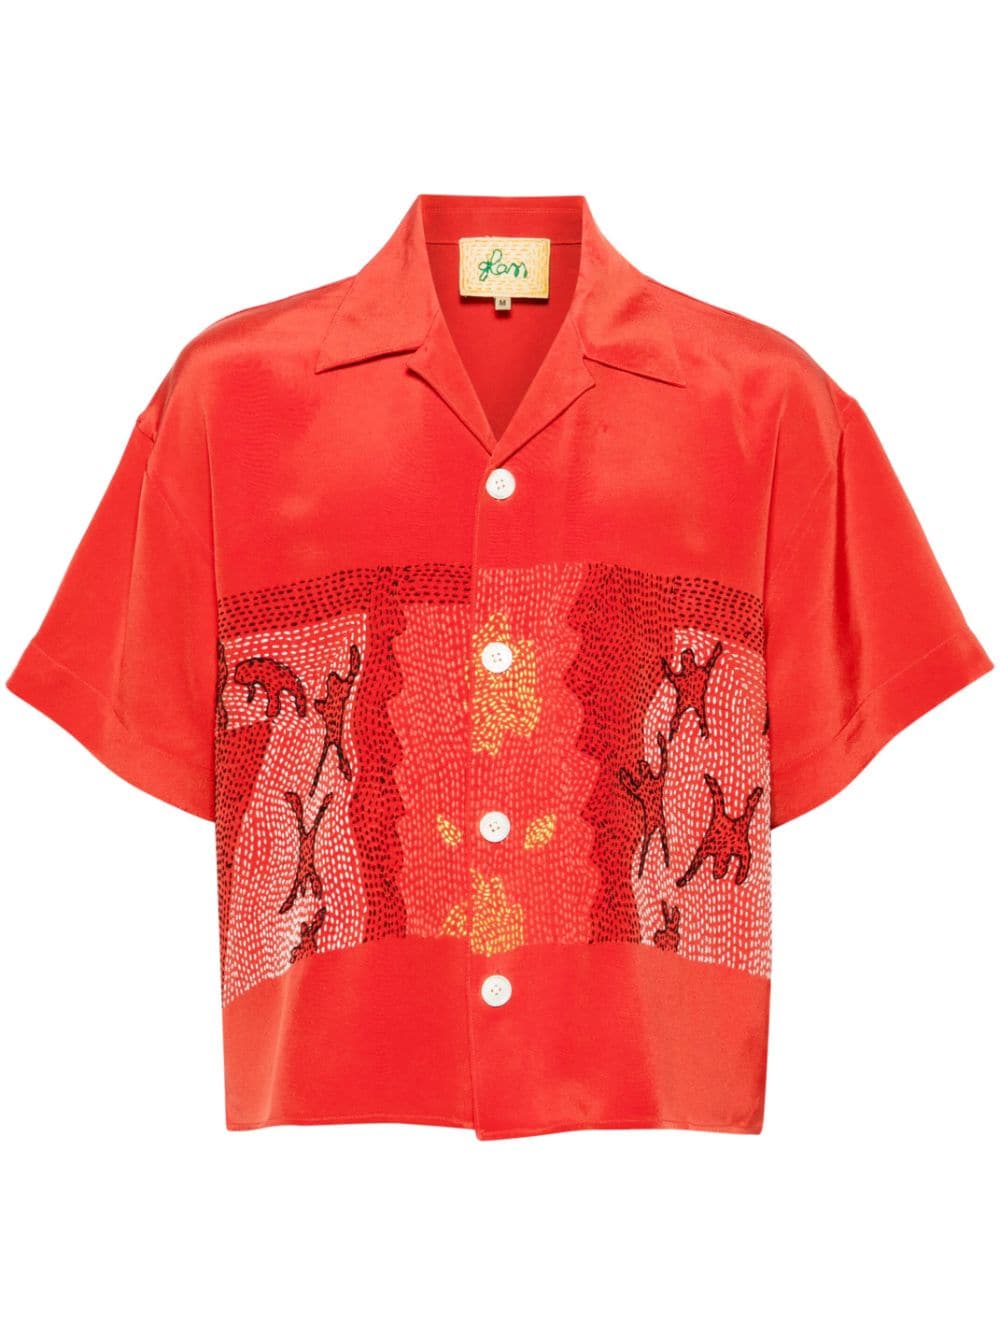 Inferno-embroidered silk shirt